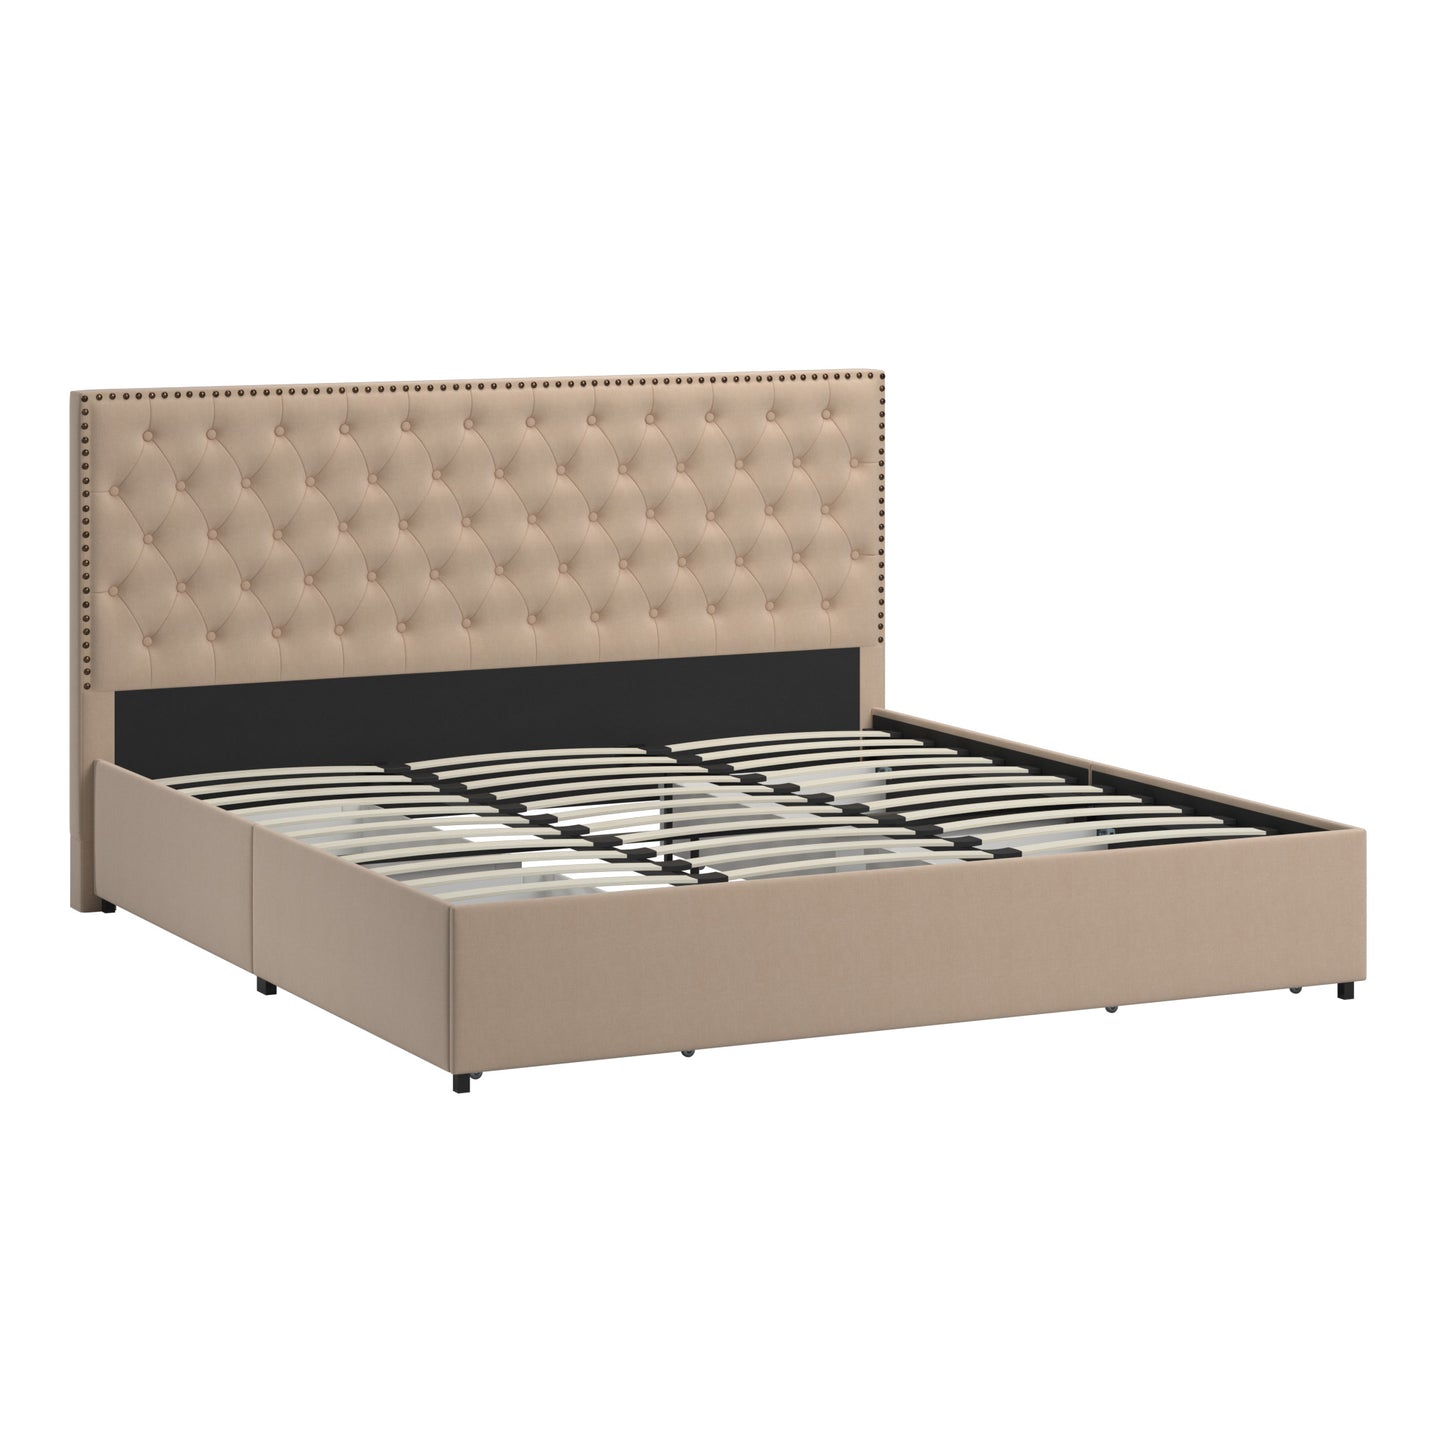 Nailhead Linen Headboard Storage Platform Bed - King Size (King Size)